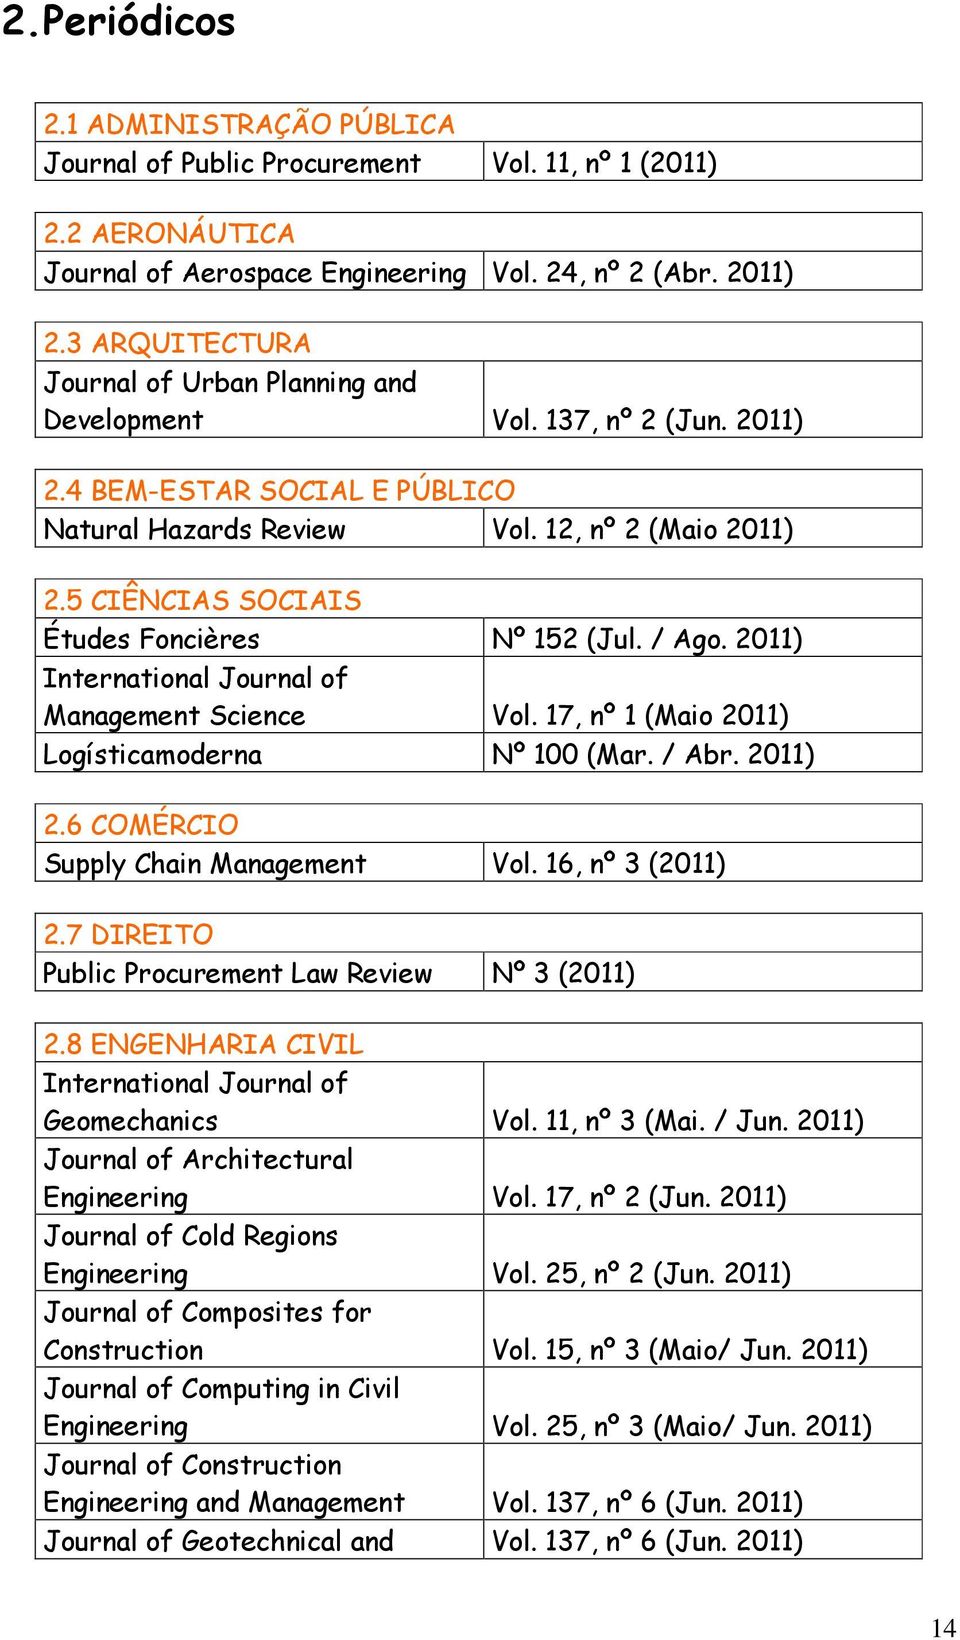 5 CIÊNCIAS SOCIAIS Études Foncières Nº 152 (Jul. / Ago. 2011) International Journal of Management Science Vol. 17, nº 1 (Maio 2011) Logísticamoderna Nº 100 (Mar. / Abr. 2011) 2.